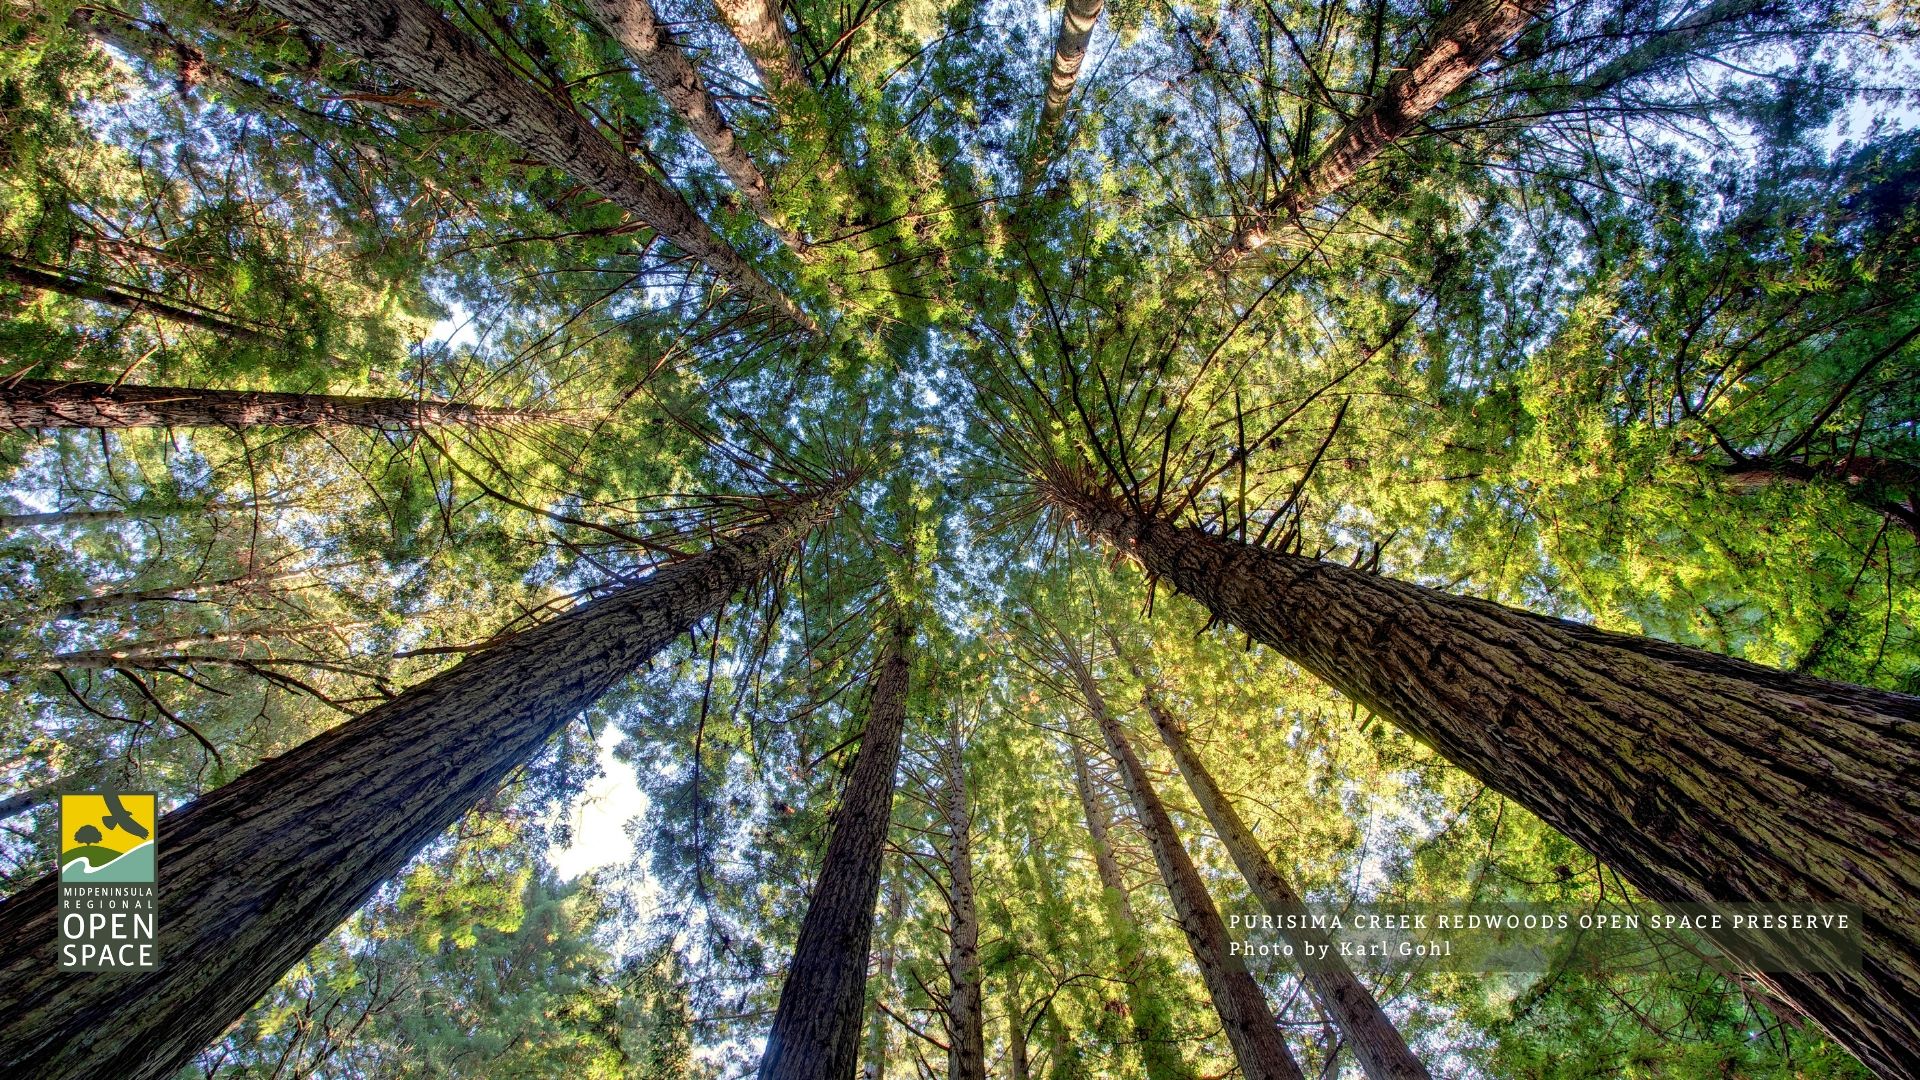 Redwood Trees at Purisima Creek Redwoods Preserve